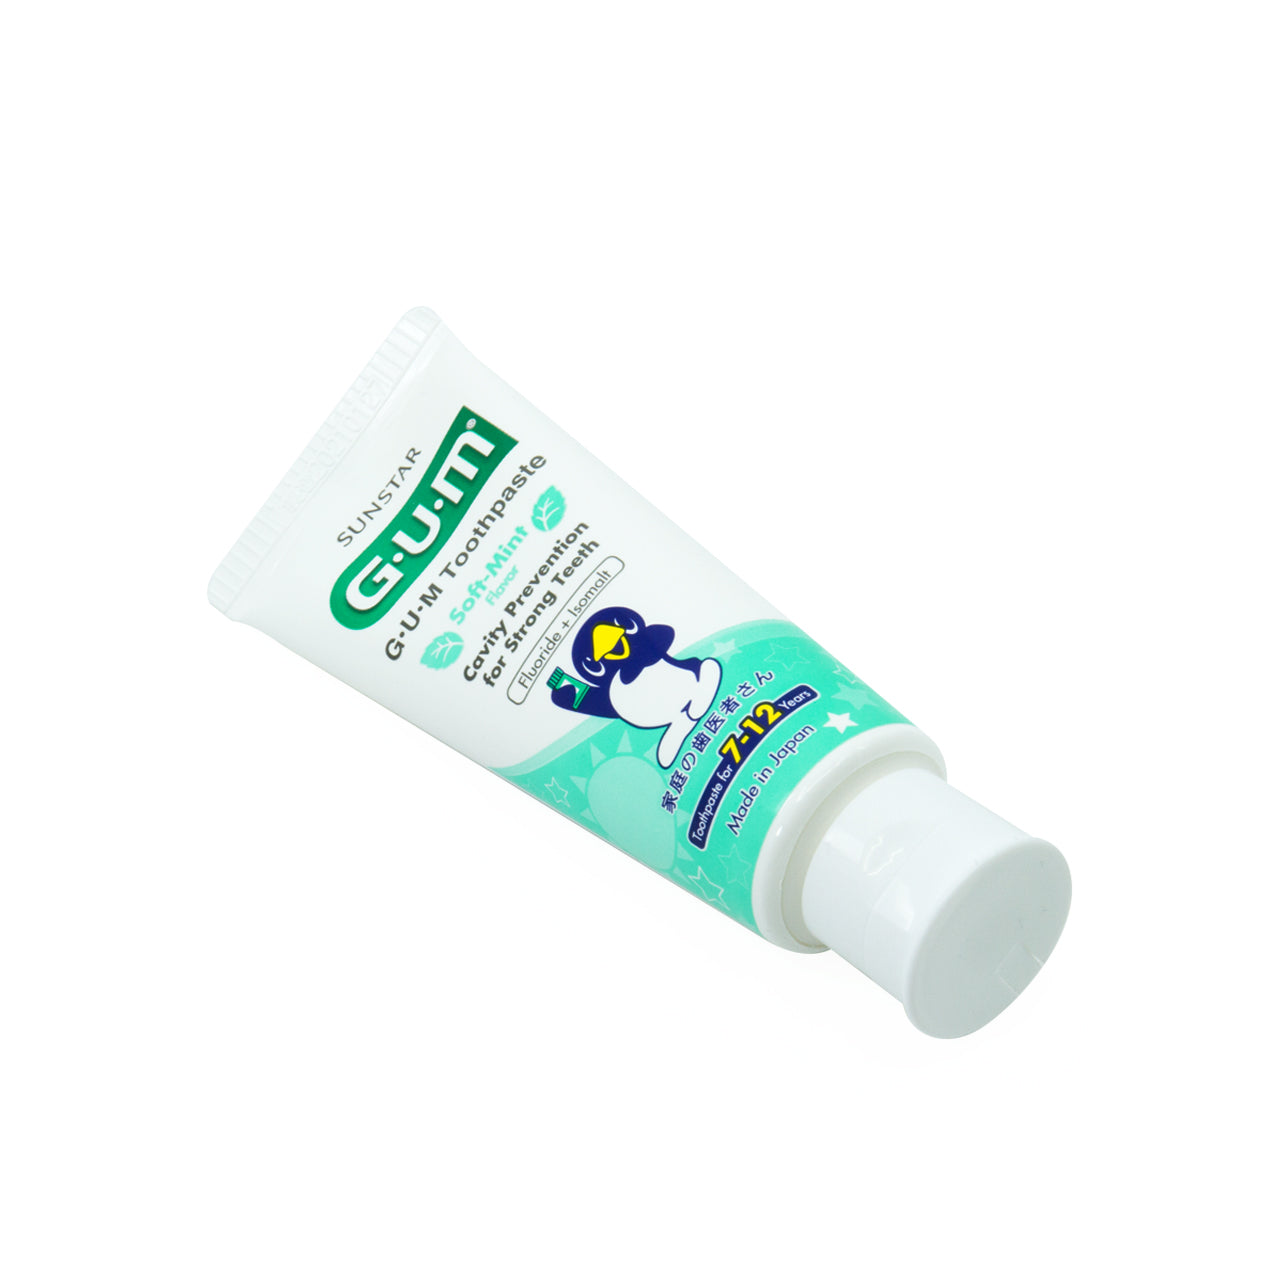 Sunstar G.U.M Toothpaste 7-12 Years Mint 70G | Sasa Global eShop